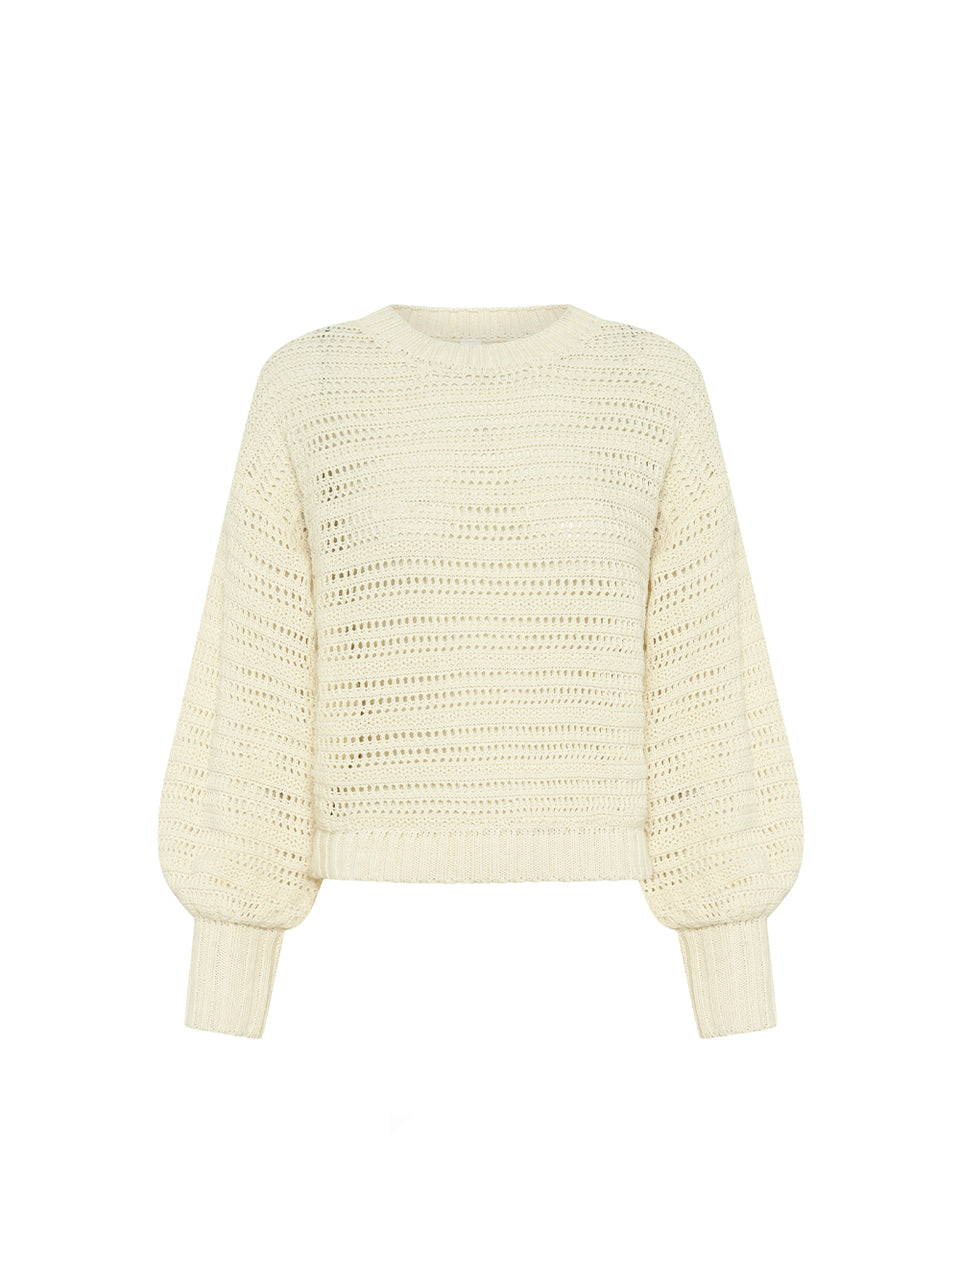 Pepe Knit Sweater Cream KIVARI | Cream knit sweater